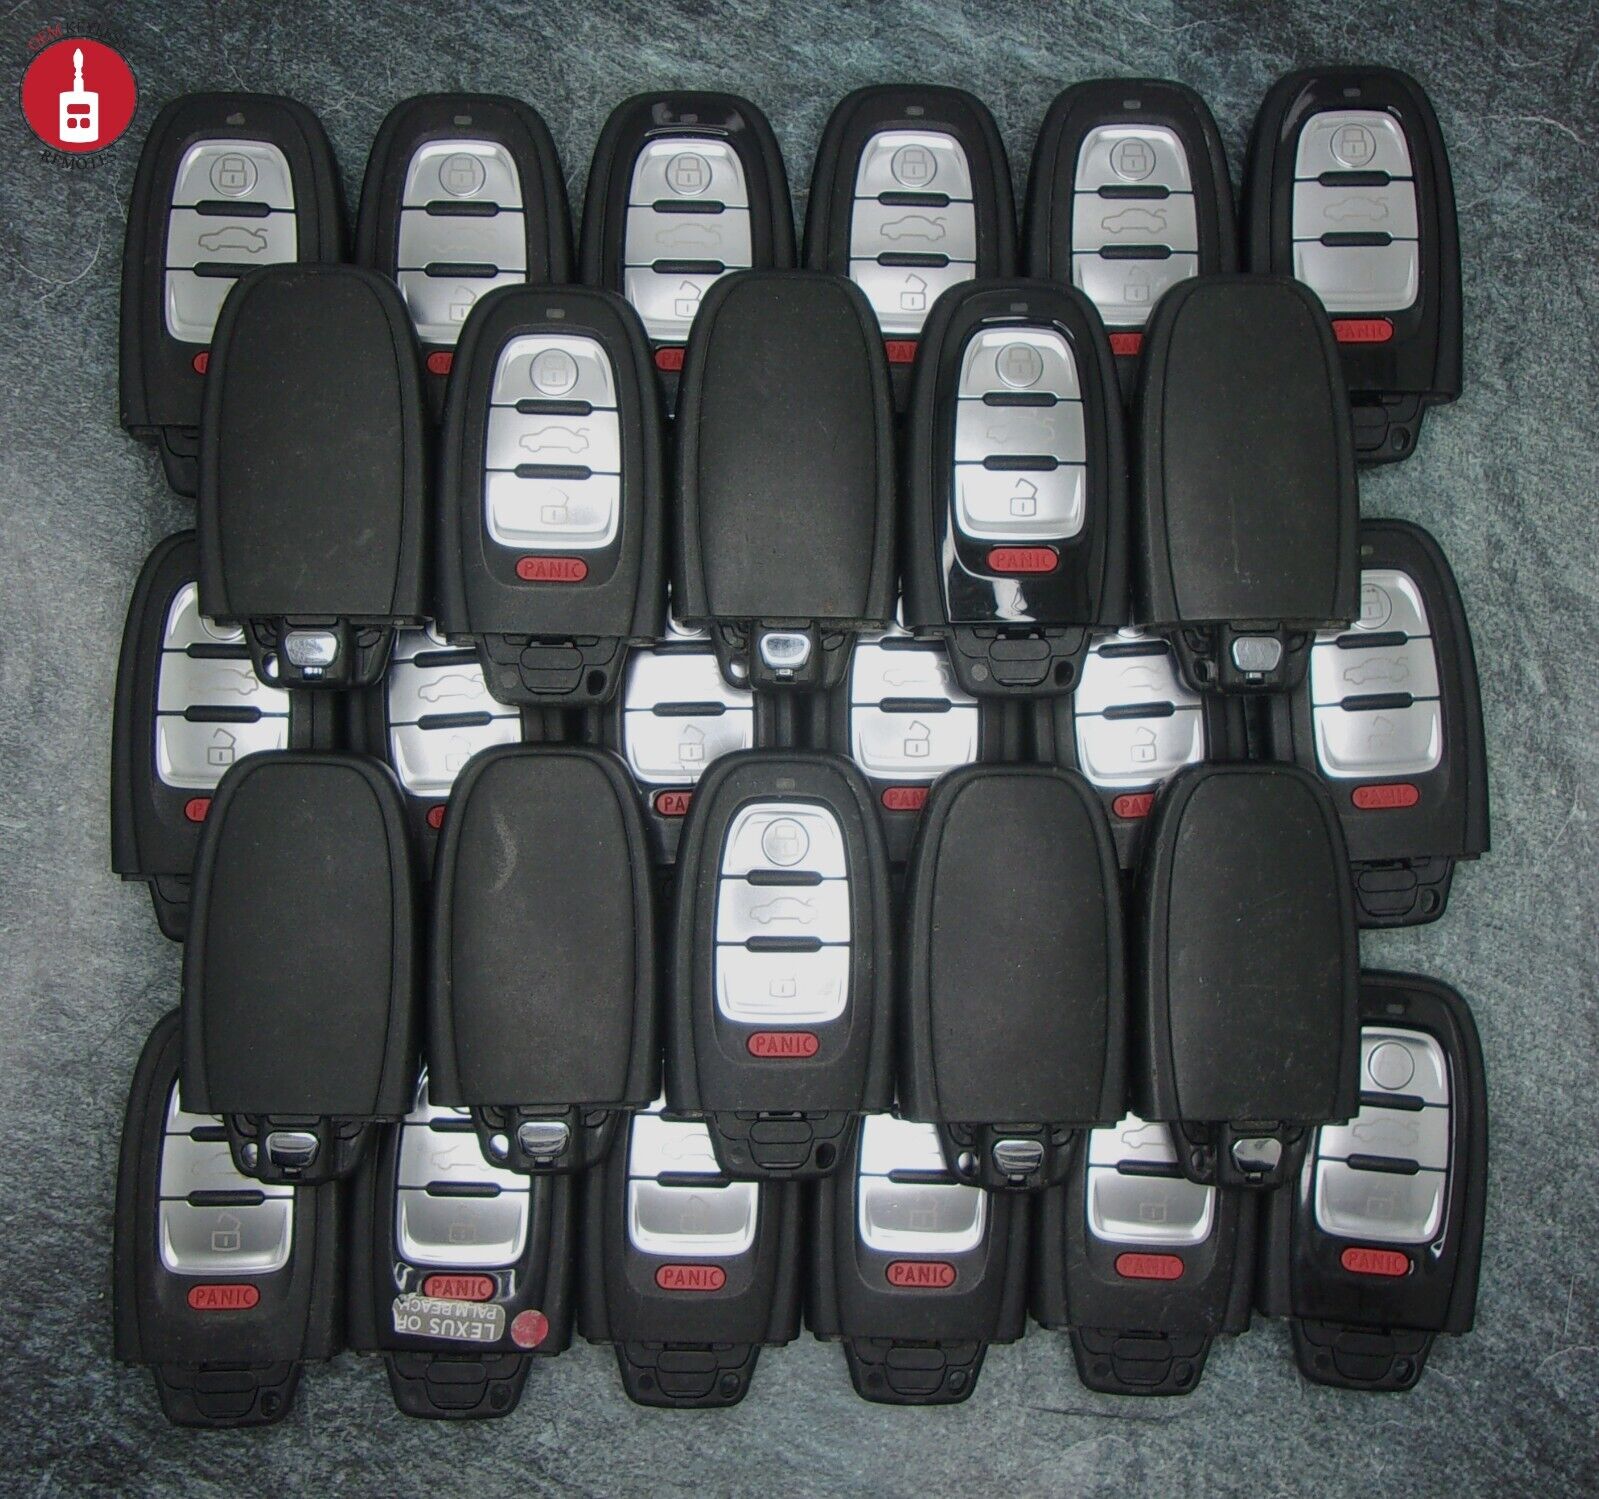 Lot of 28 OEM Audi Keyless Entry Remote Smart Keys Used Bulk -IYZFBSB802-